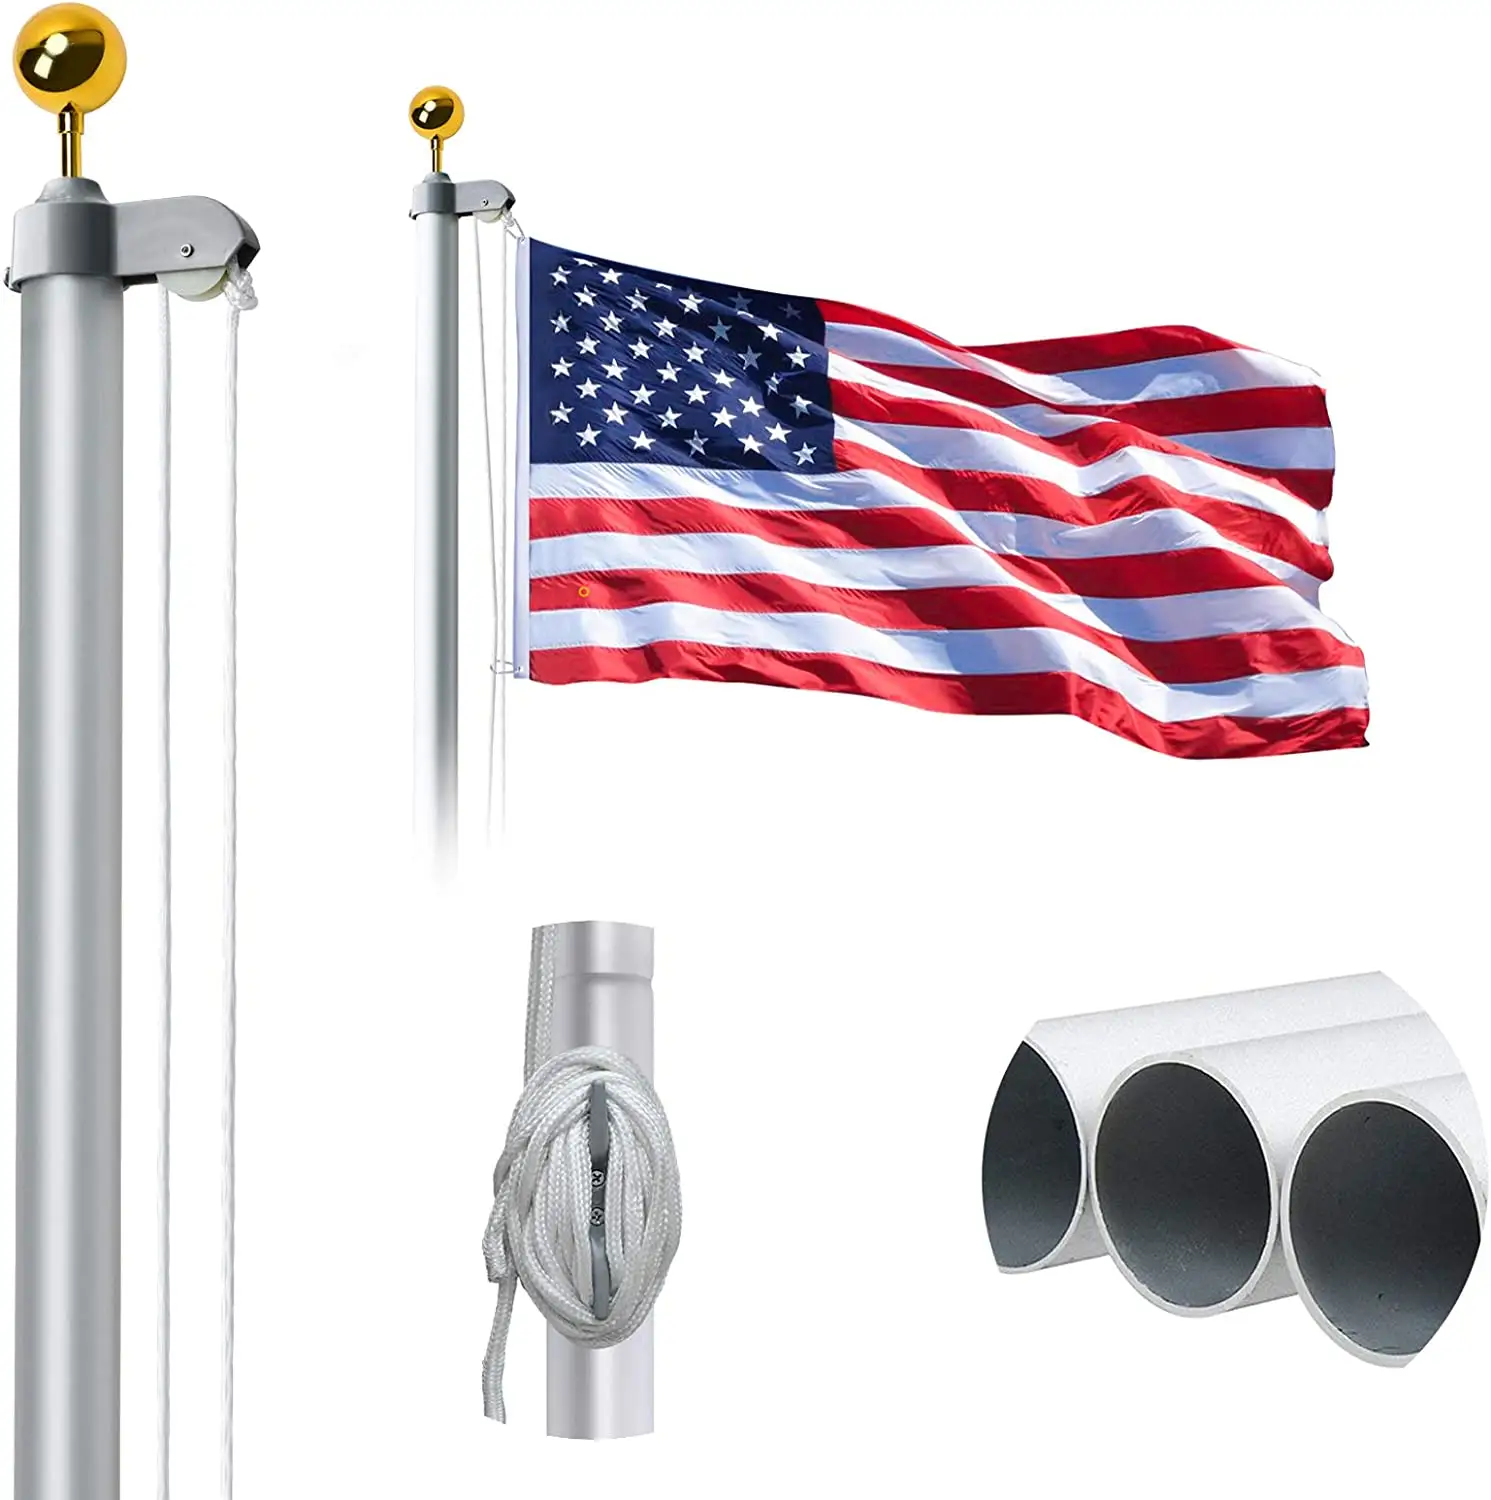 25FT Sectional Flag Pole Kit, extra dickes Hochleistungs-Aluminium im Freien im Boden Fahnenmast